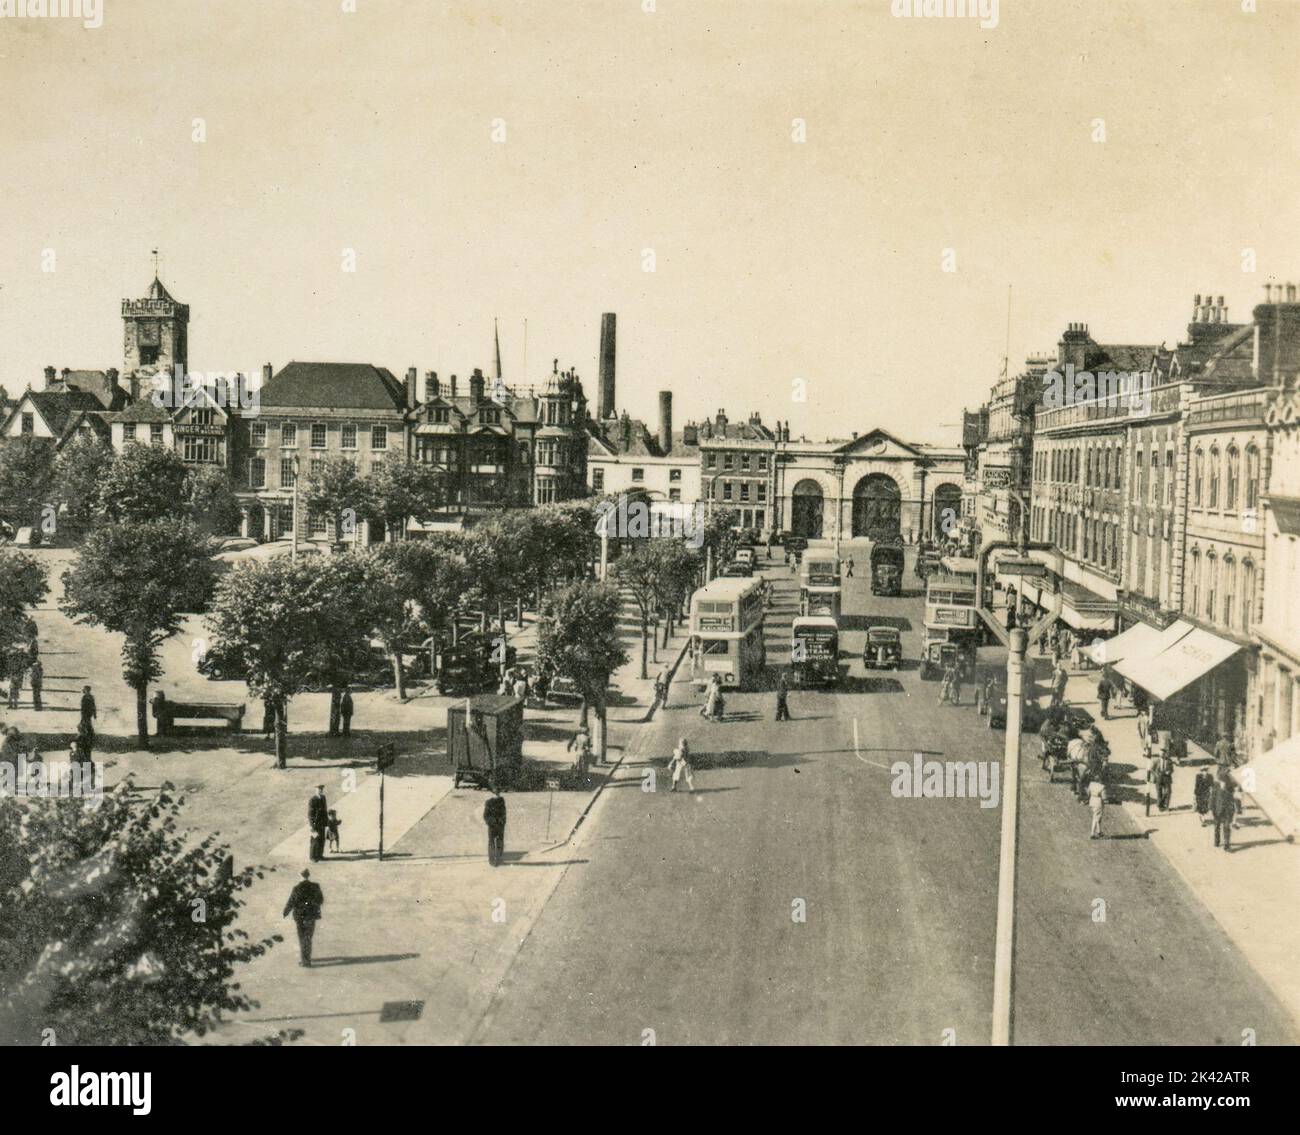 View of Market Square, Salisbury, UK 1930s Stock Photo